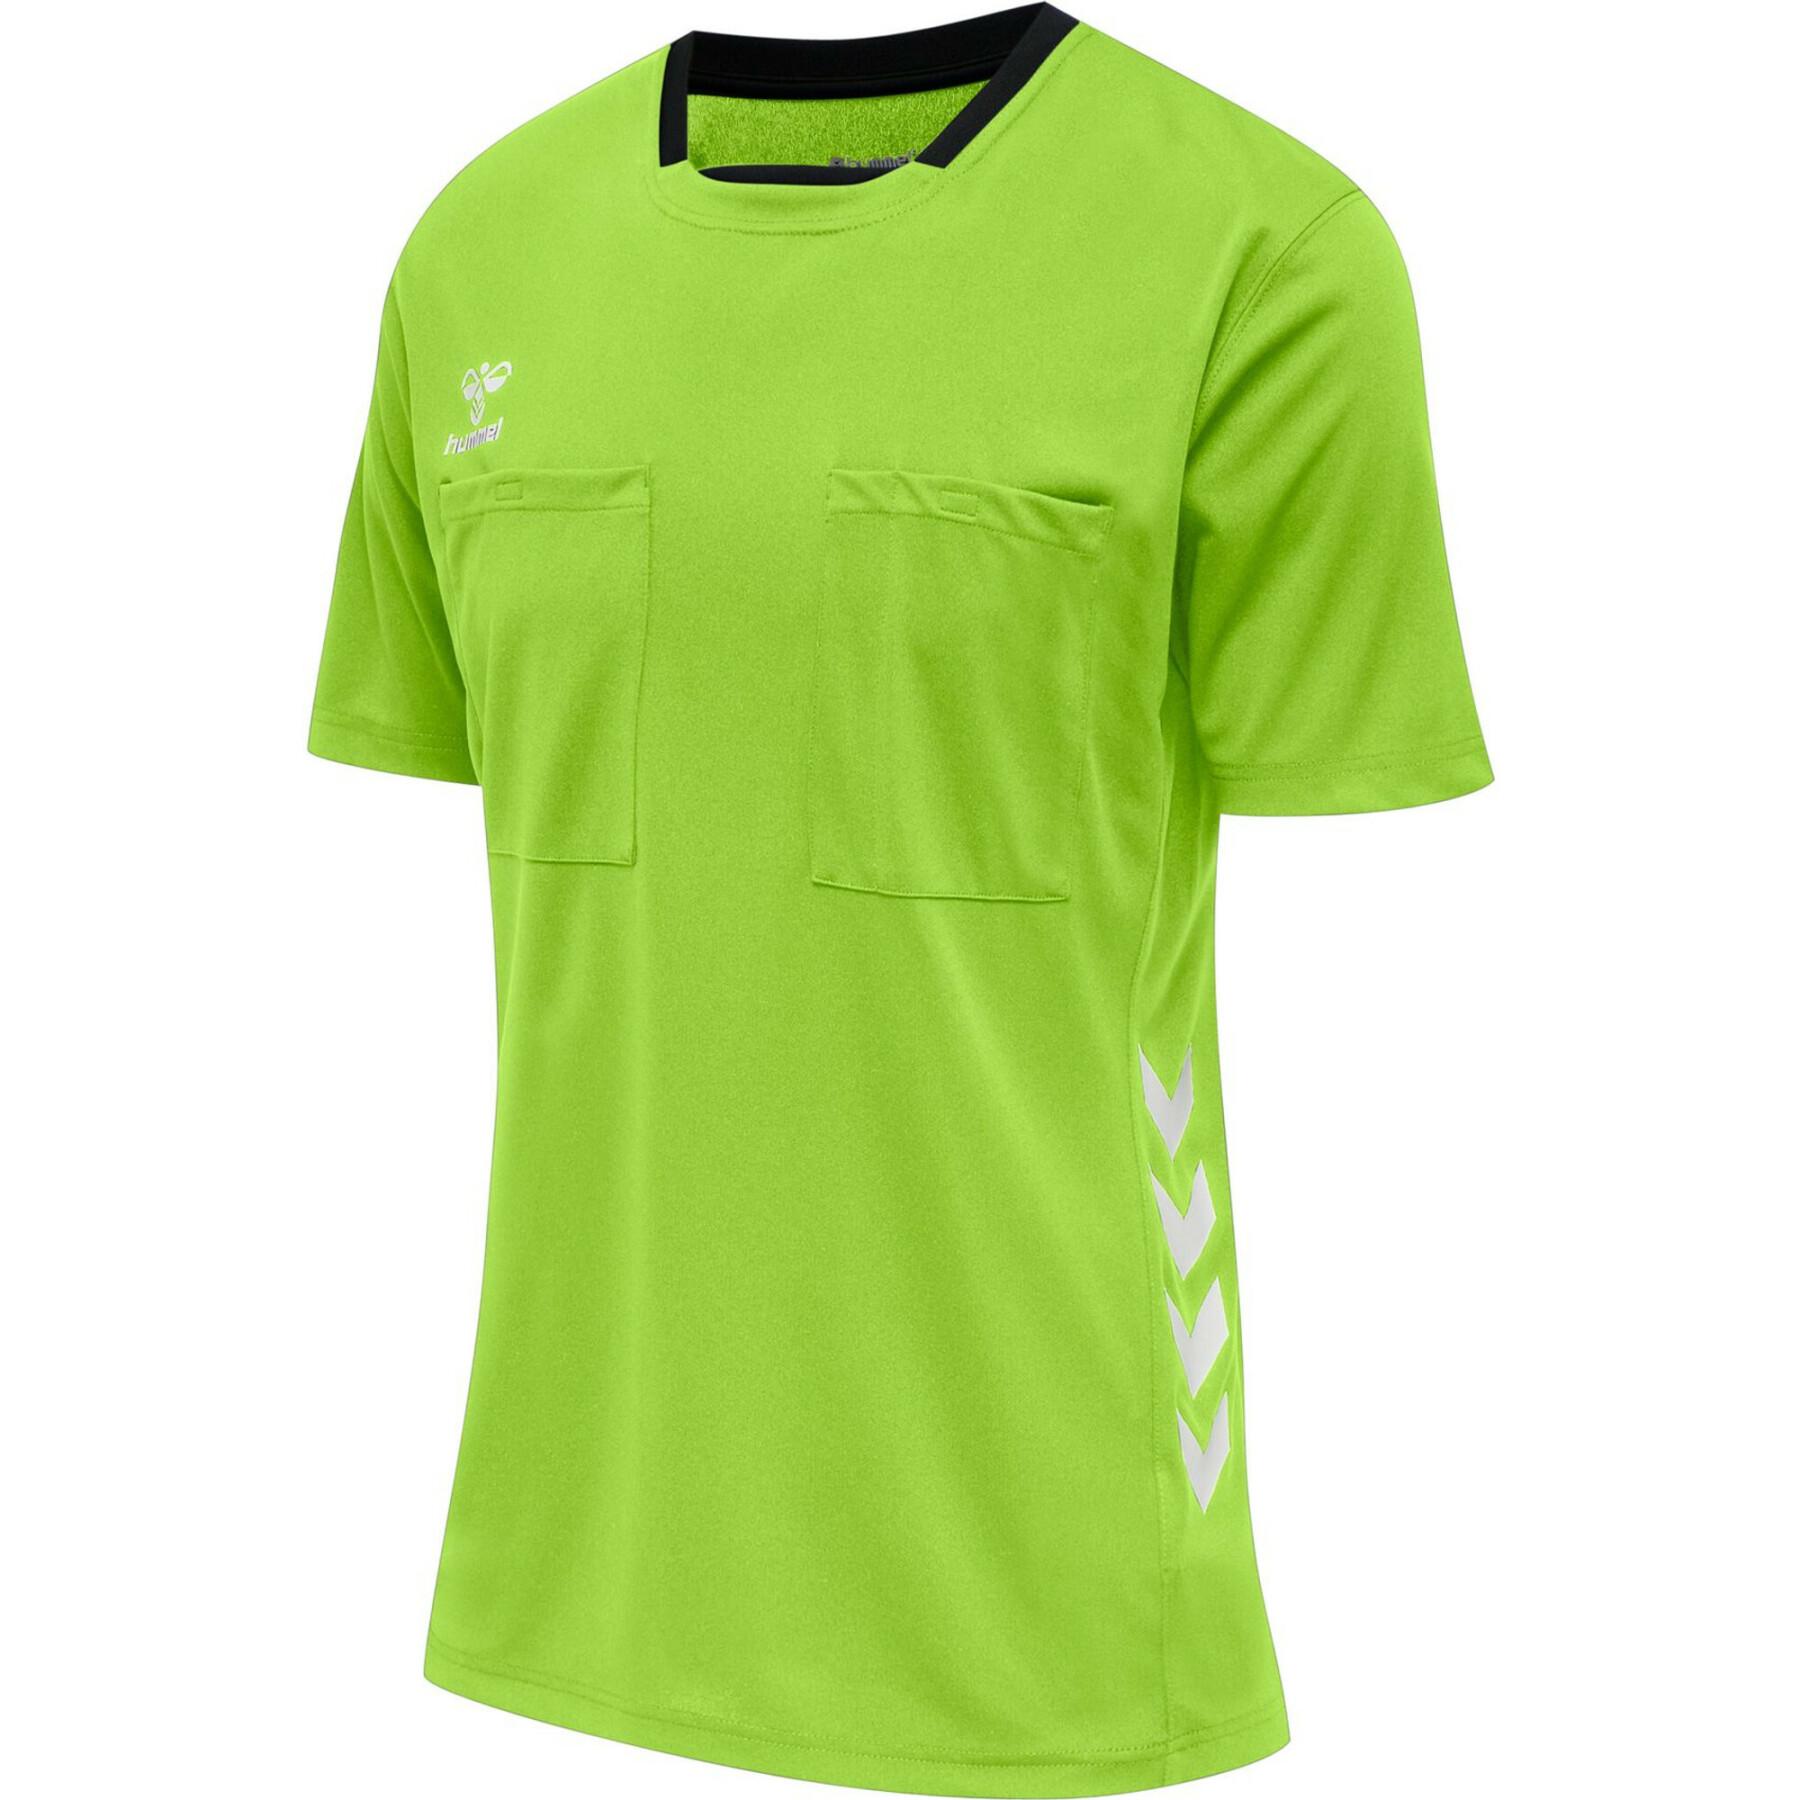 Women\'s T-shirt Hummel hml referee wear shirts polo Handball wear & - T-shirts Women\'s - chevron 